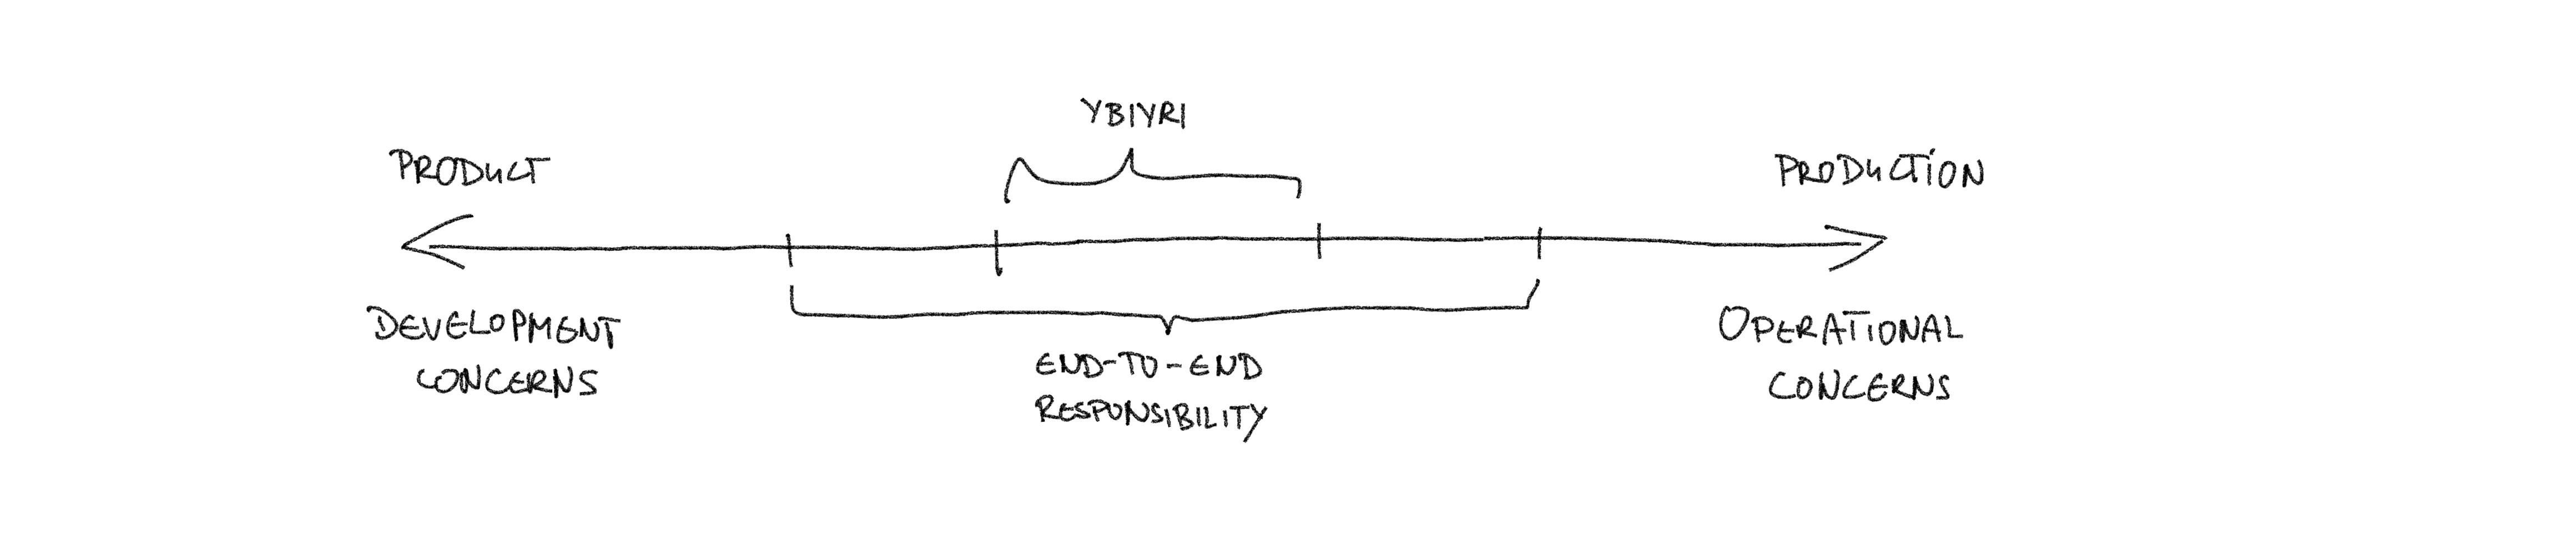 YBIYRI vs end-to-end responsibility